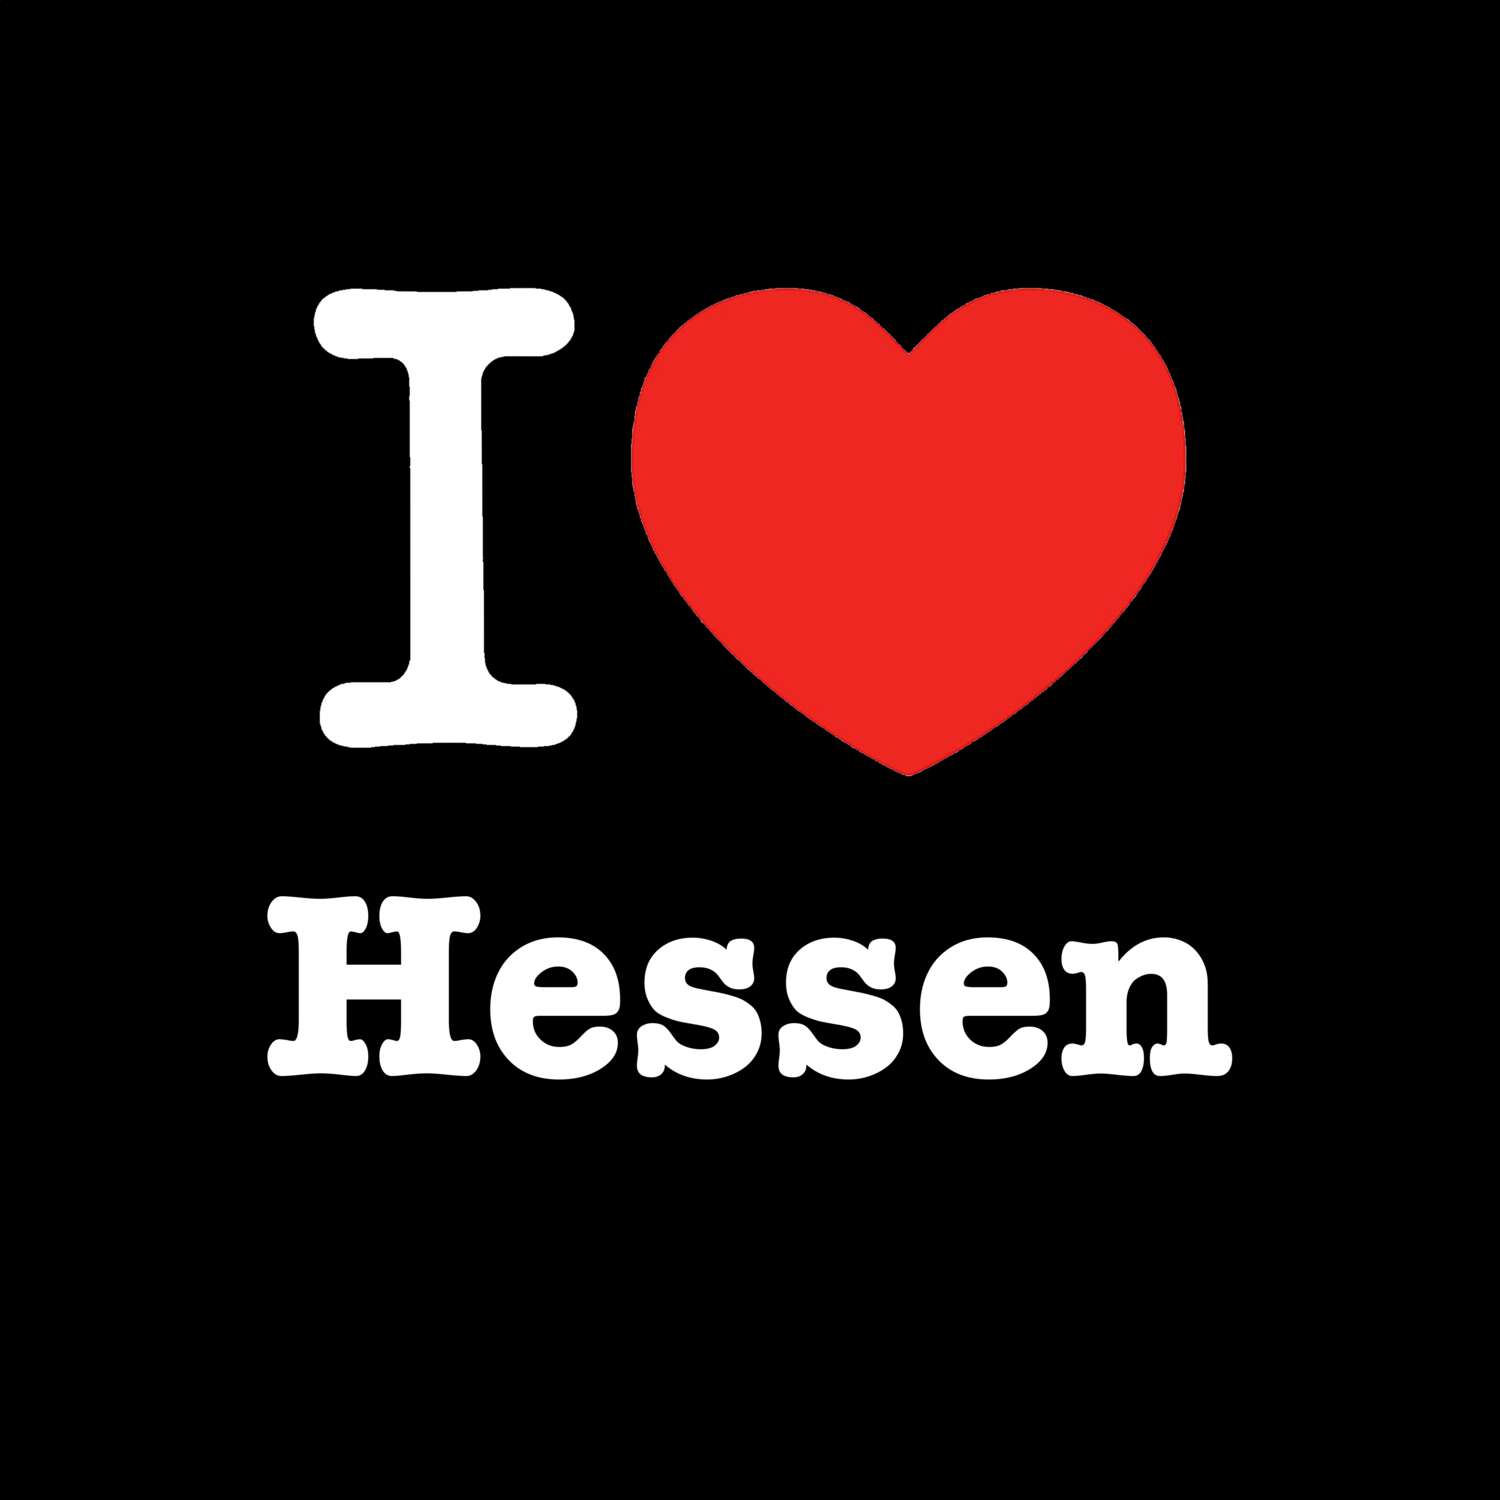 Hessen T-Shirt »I love«